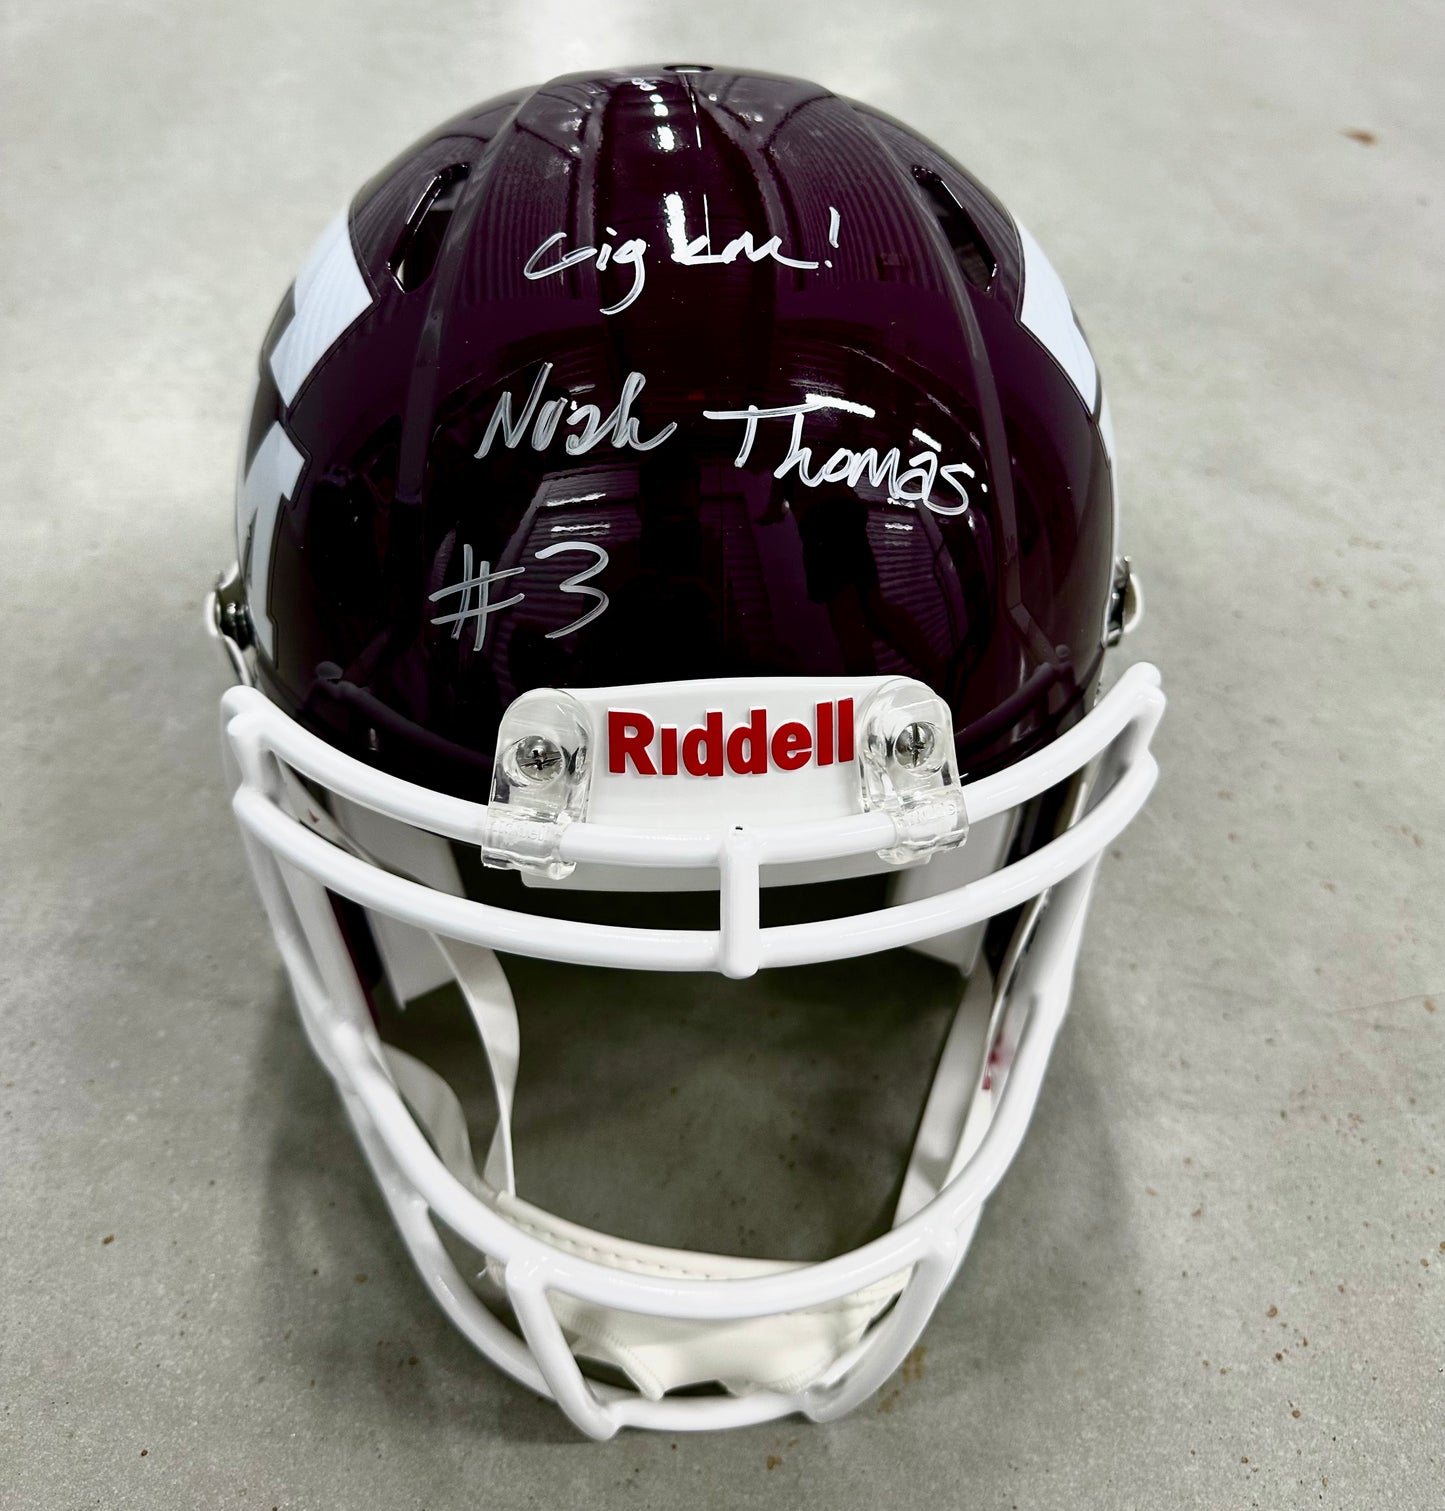 Noah Thomas signed helmet